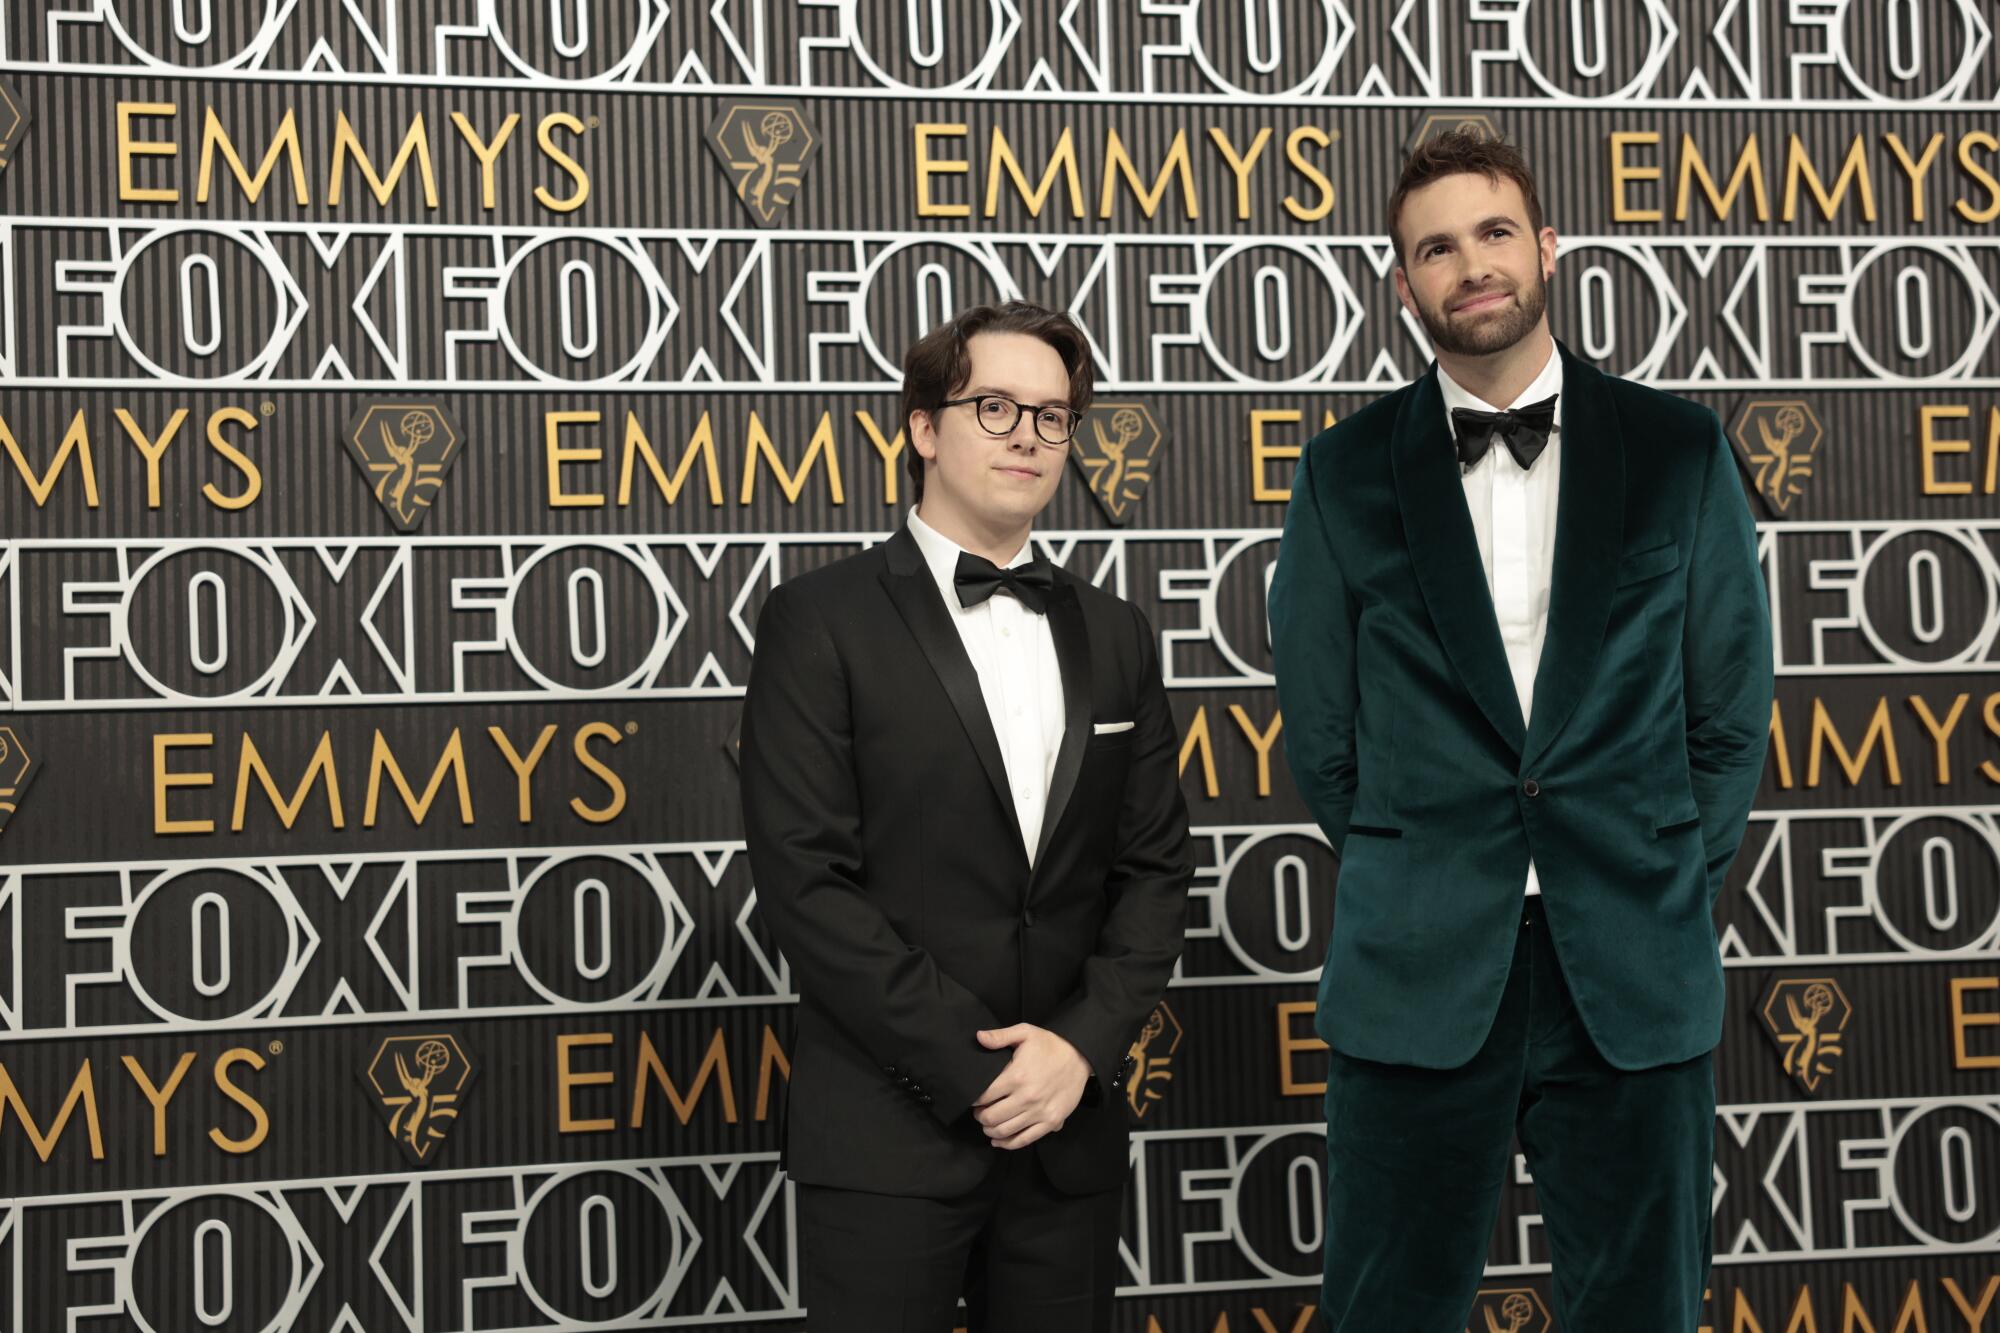 Mekki Leeper and Ronald Gladden on the Emmys red carpet.